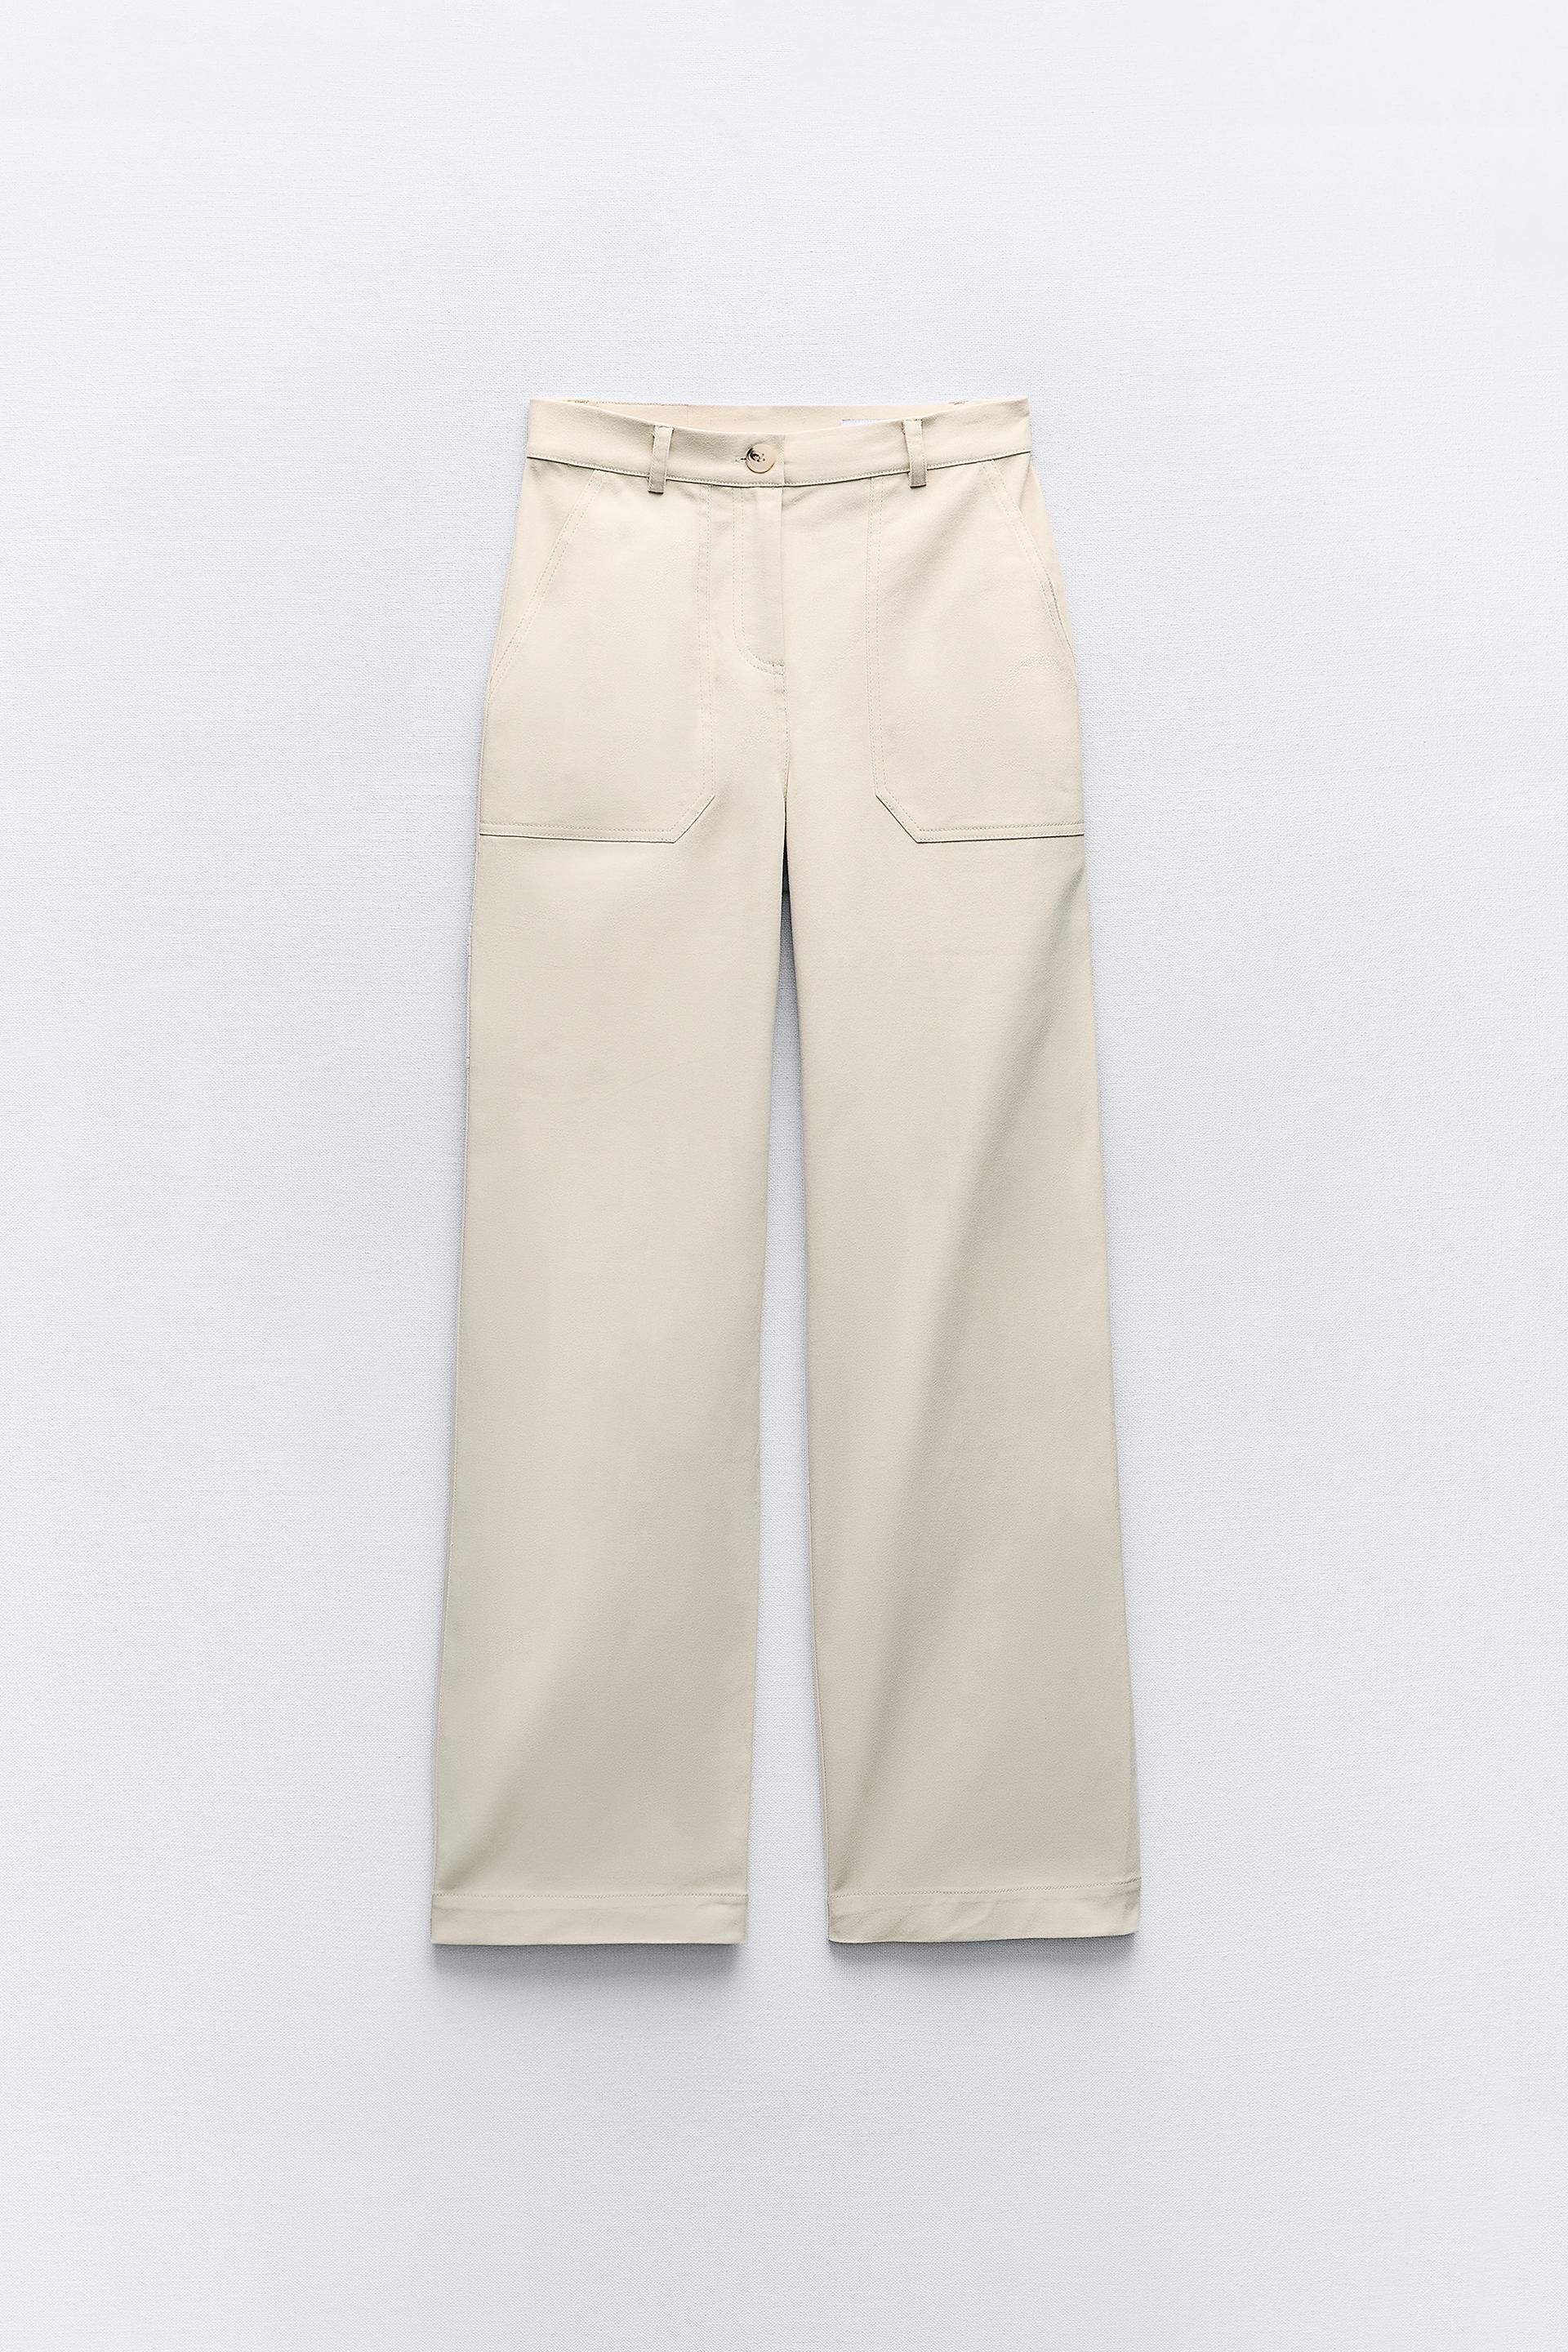 Zara Women Waist Detail Pants Trousers Ecru Bloggers Fav 2490/703 Size S